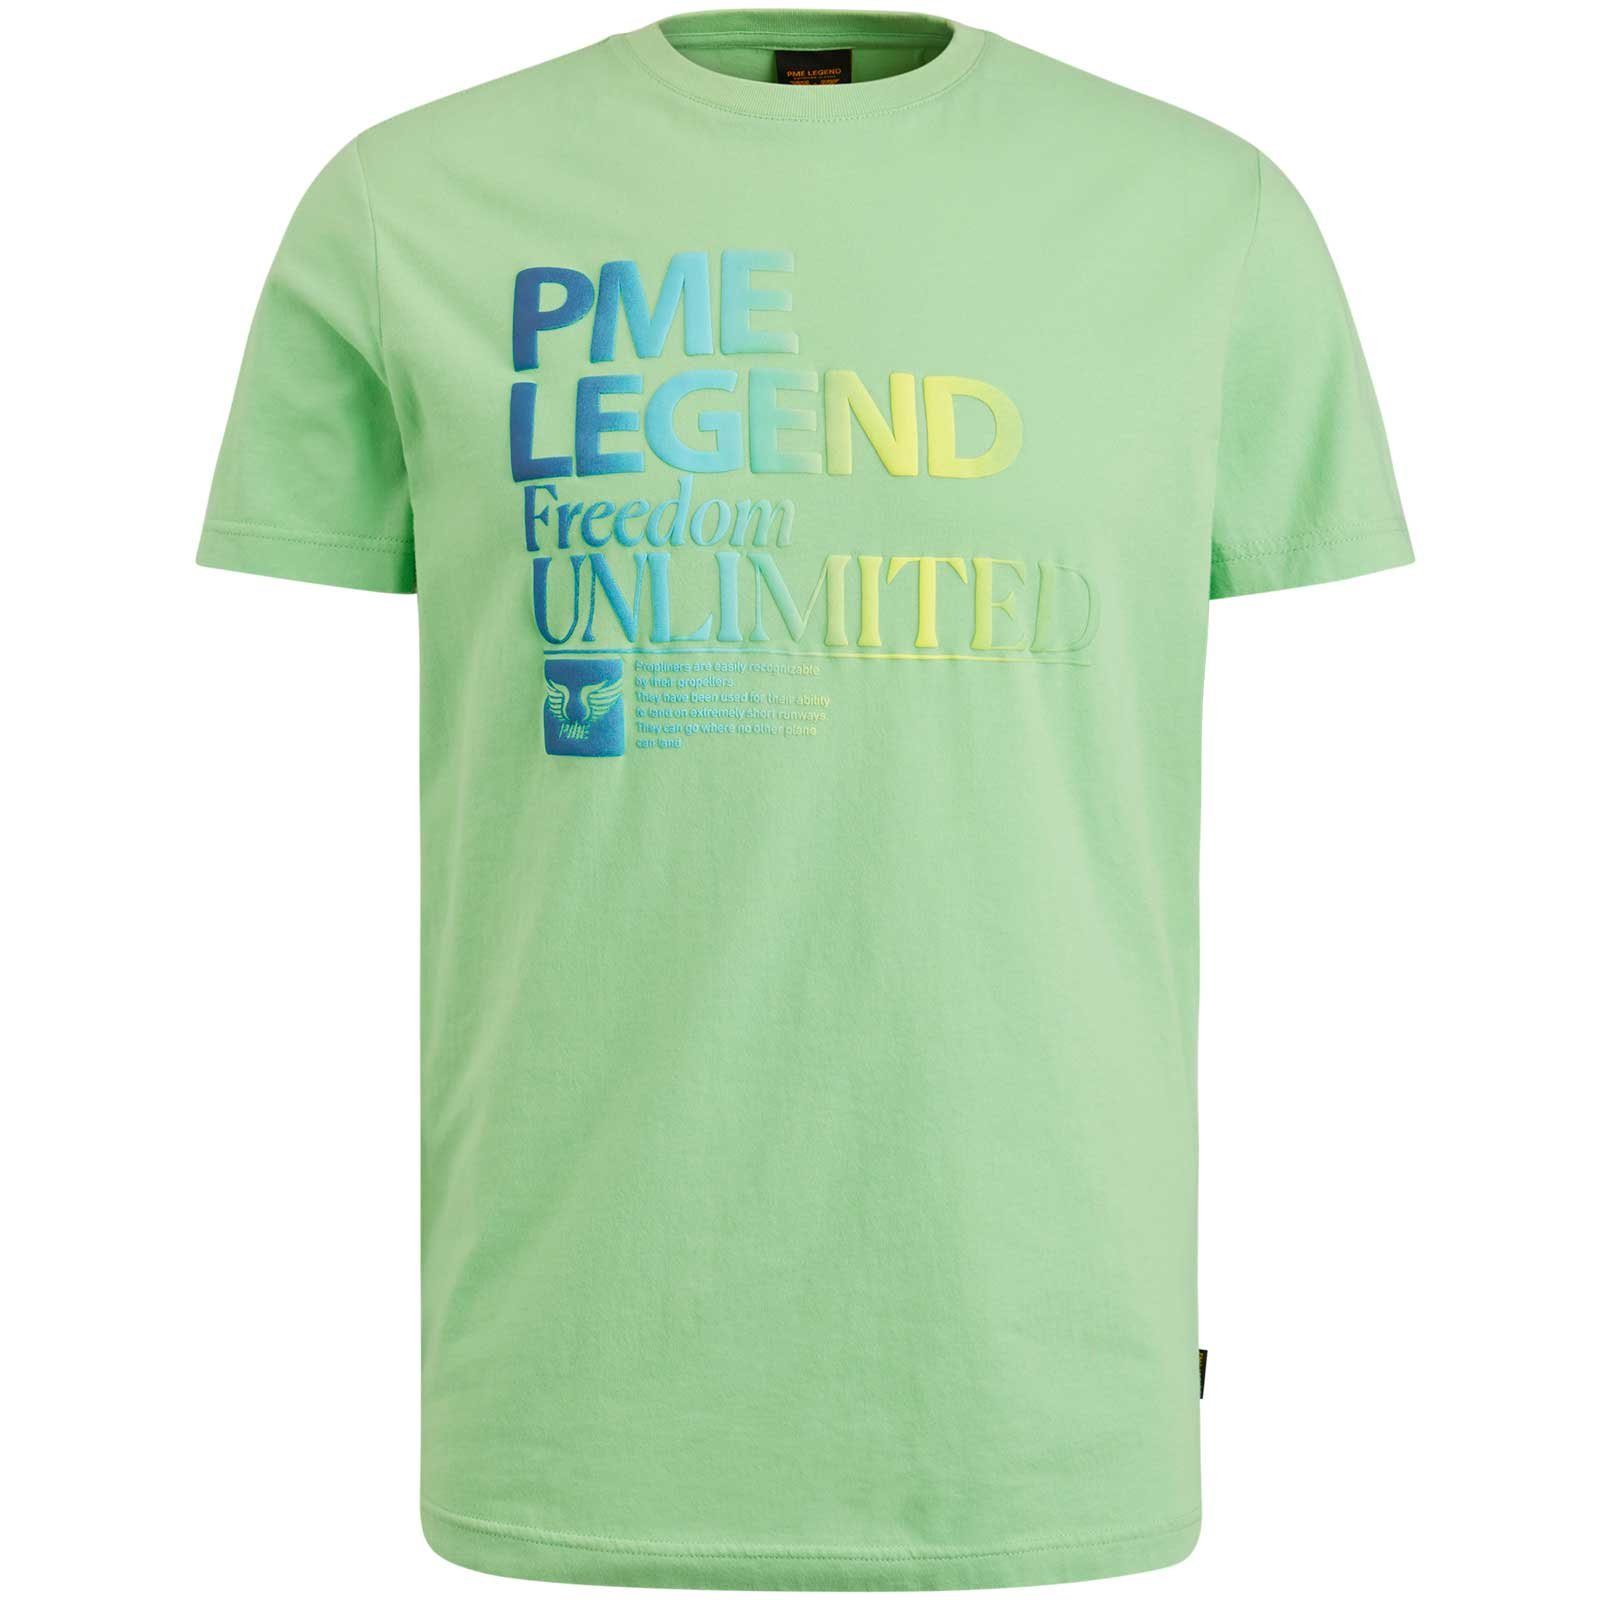 PME LEGEND T-Shirt greengage (hellgrün)